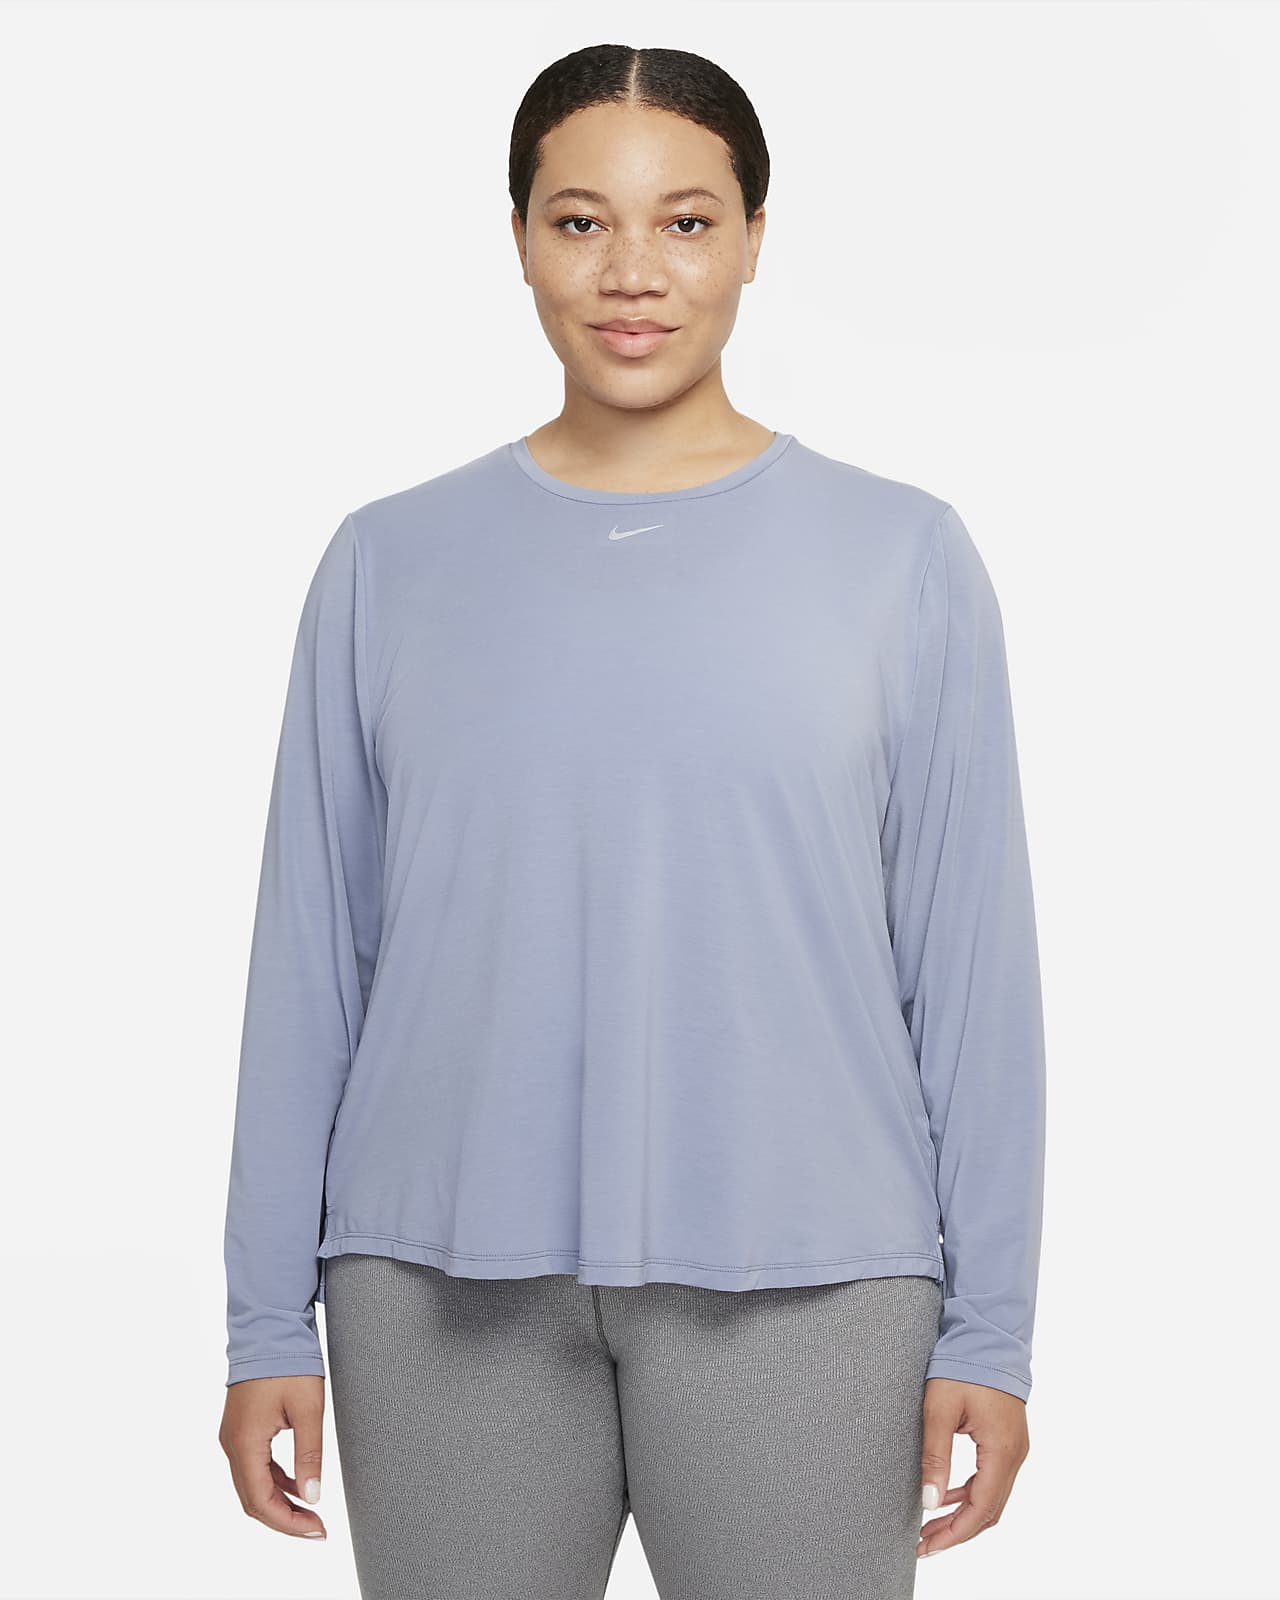 Nike Dri-FIT UV One Luxe Women's Standard Fit Long-Sleeve Top (Plus Size)